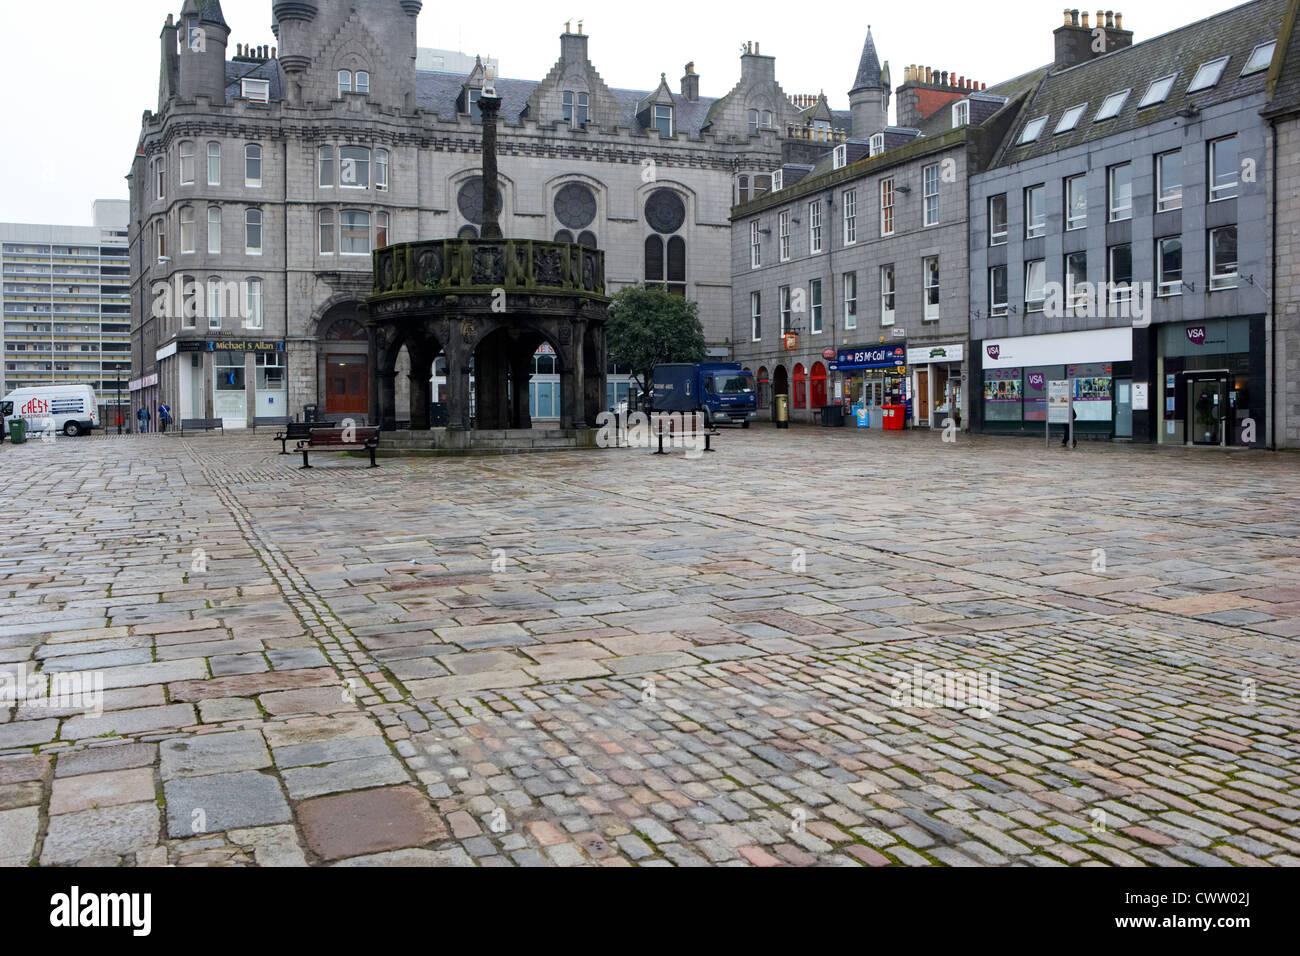 der Mercat cross in Castlegate Aberdeen Scotland uk Stockfoto